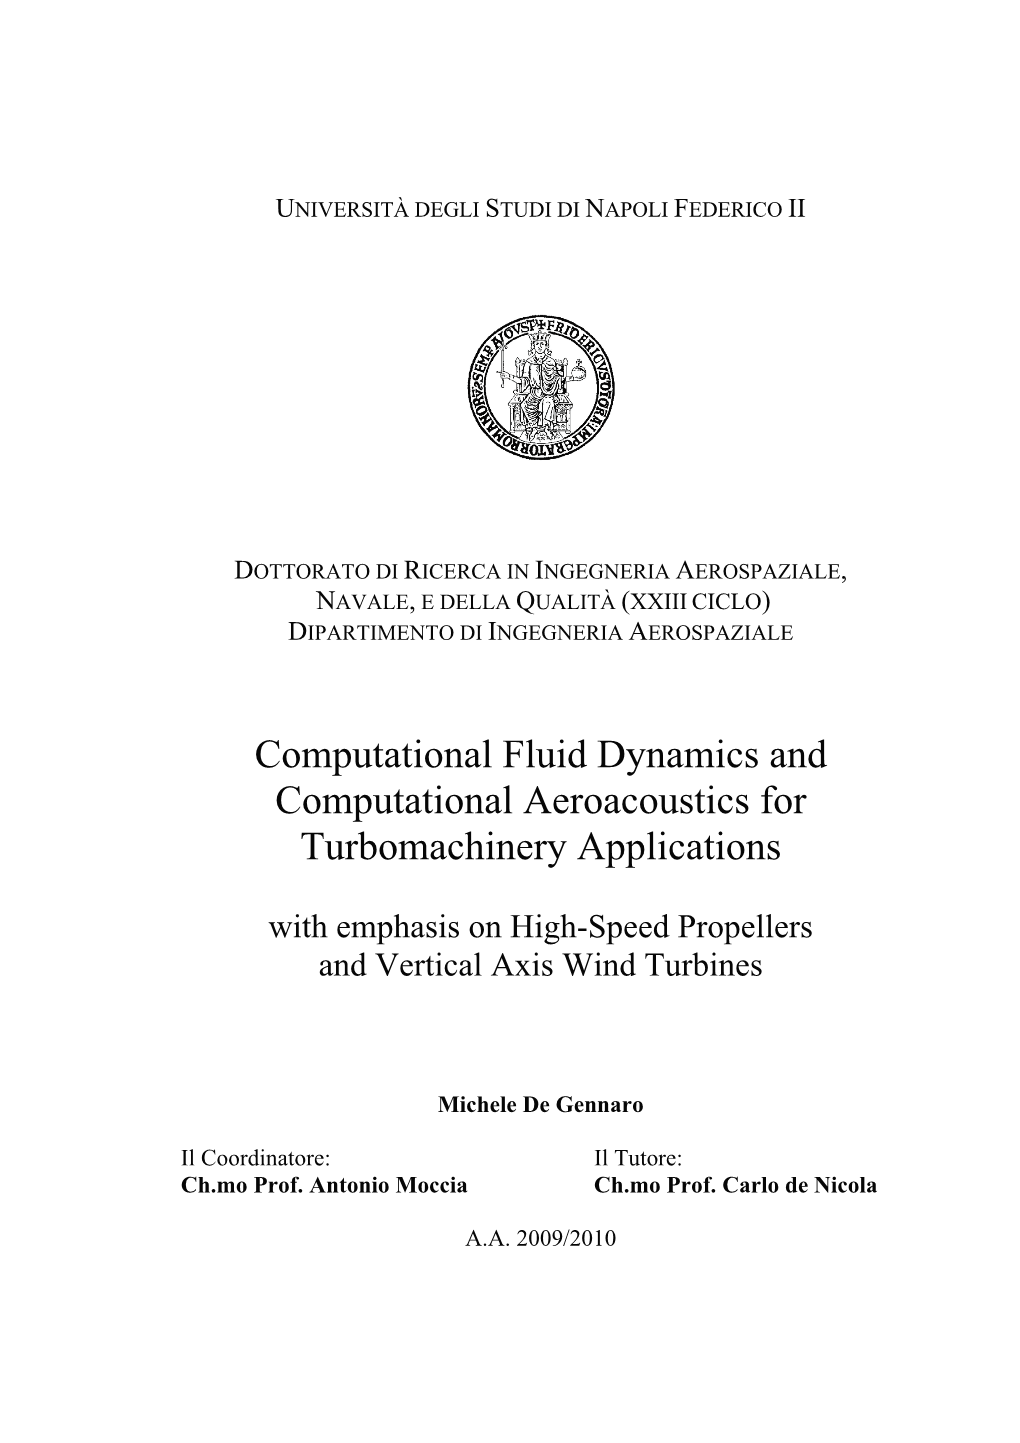 Computational Fluid Dynamics and Computational Aeroacoustics for Turbomachinery Applications